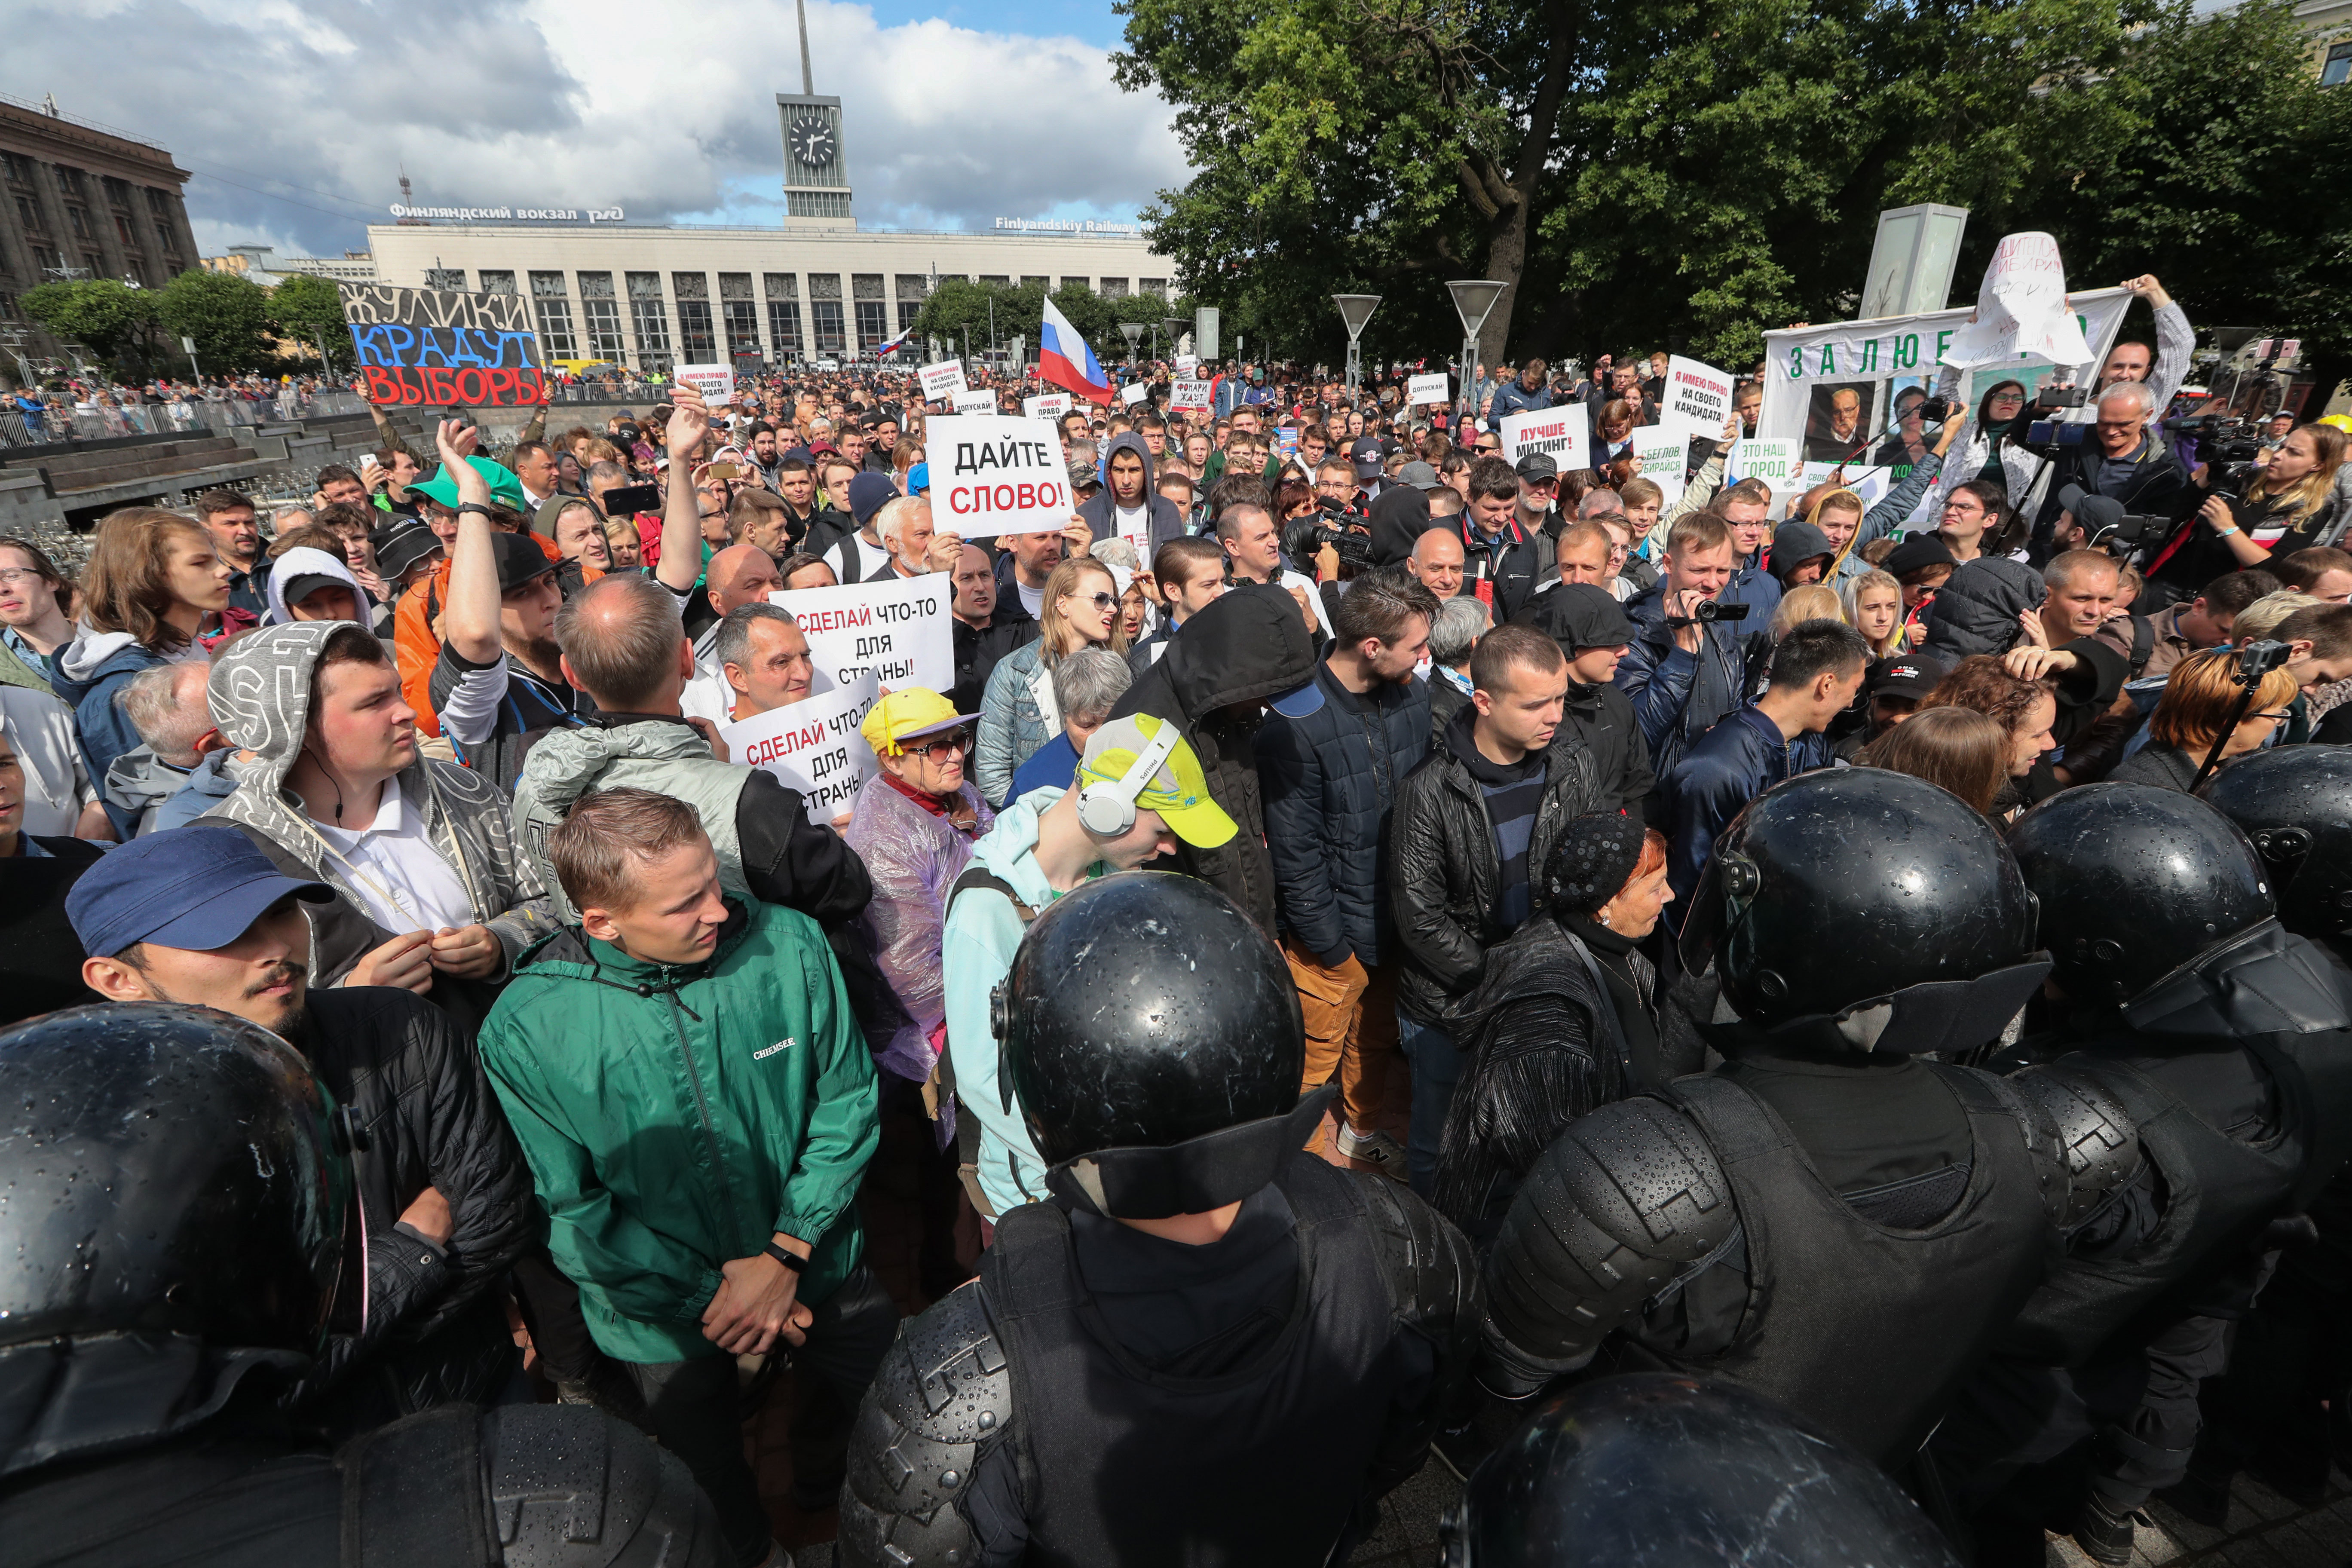 Картинка митинг. Митинг. Фоторепортаж митинг. Митингующие в Москве. Митинг в Питере 2019.